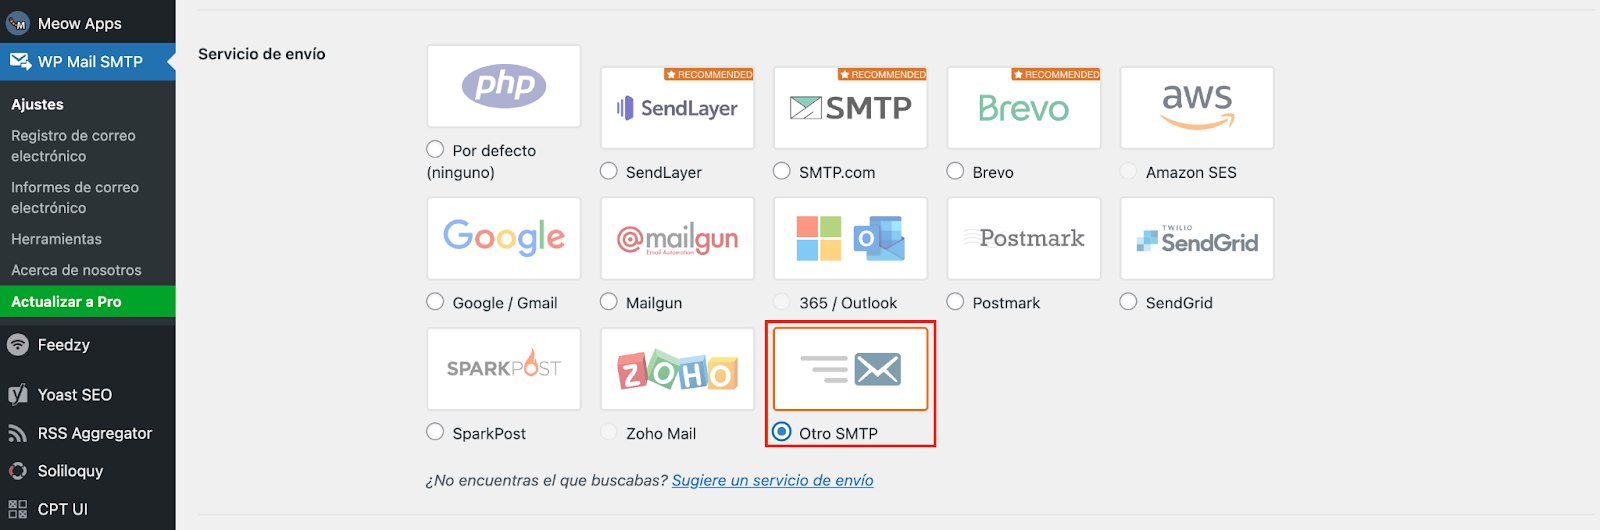 Ajustes de configuración de WP Mail SMTP